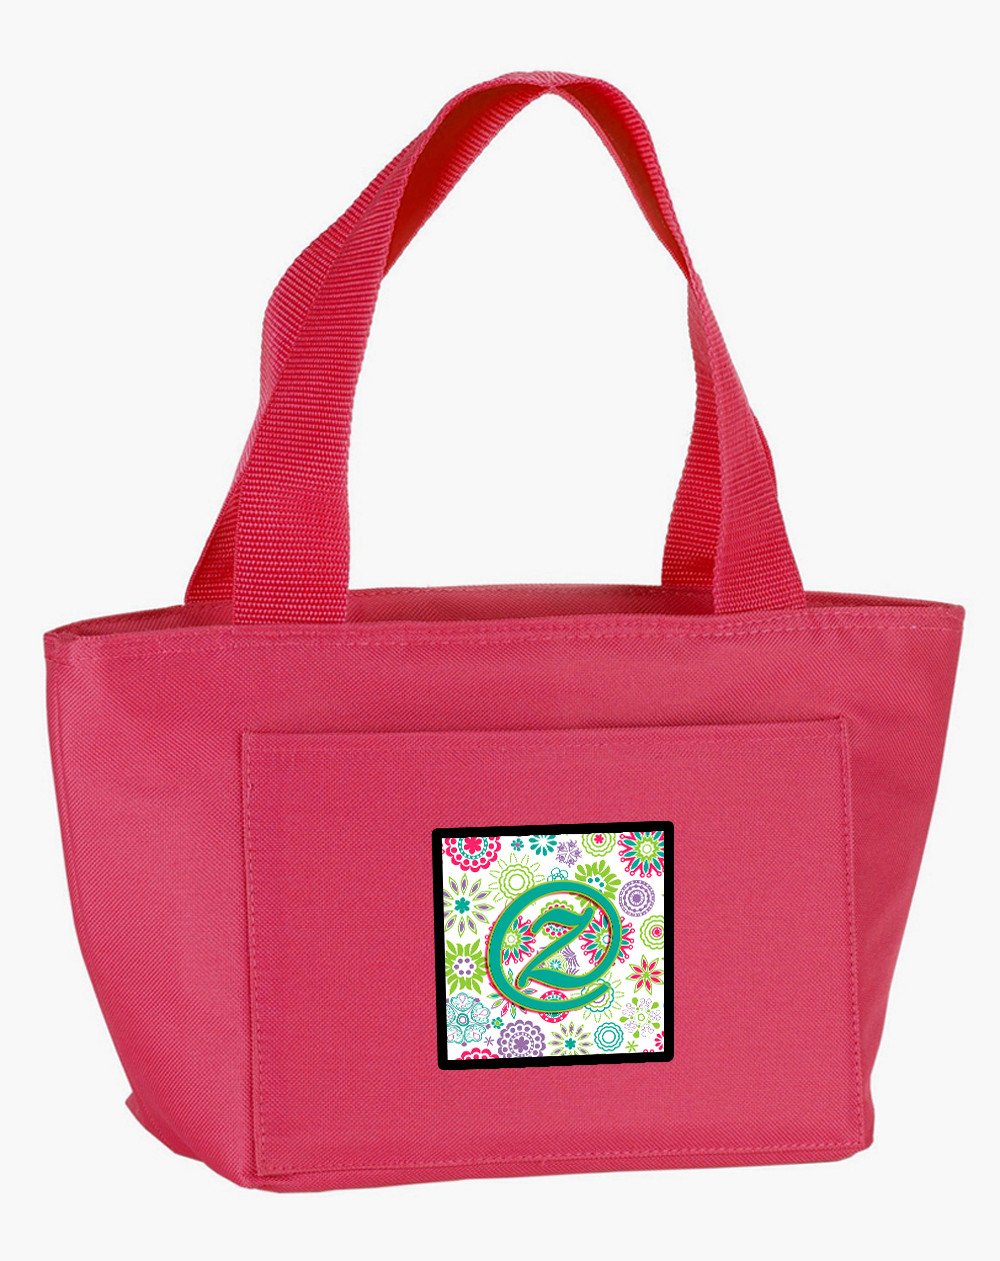 Letter Z Flowers Pink Teal Green Initial Lunch Bag CJ2011-ZPK-8808 by Caroline's Treasures